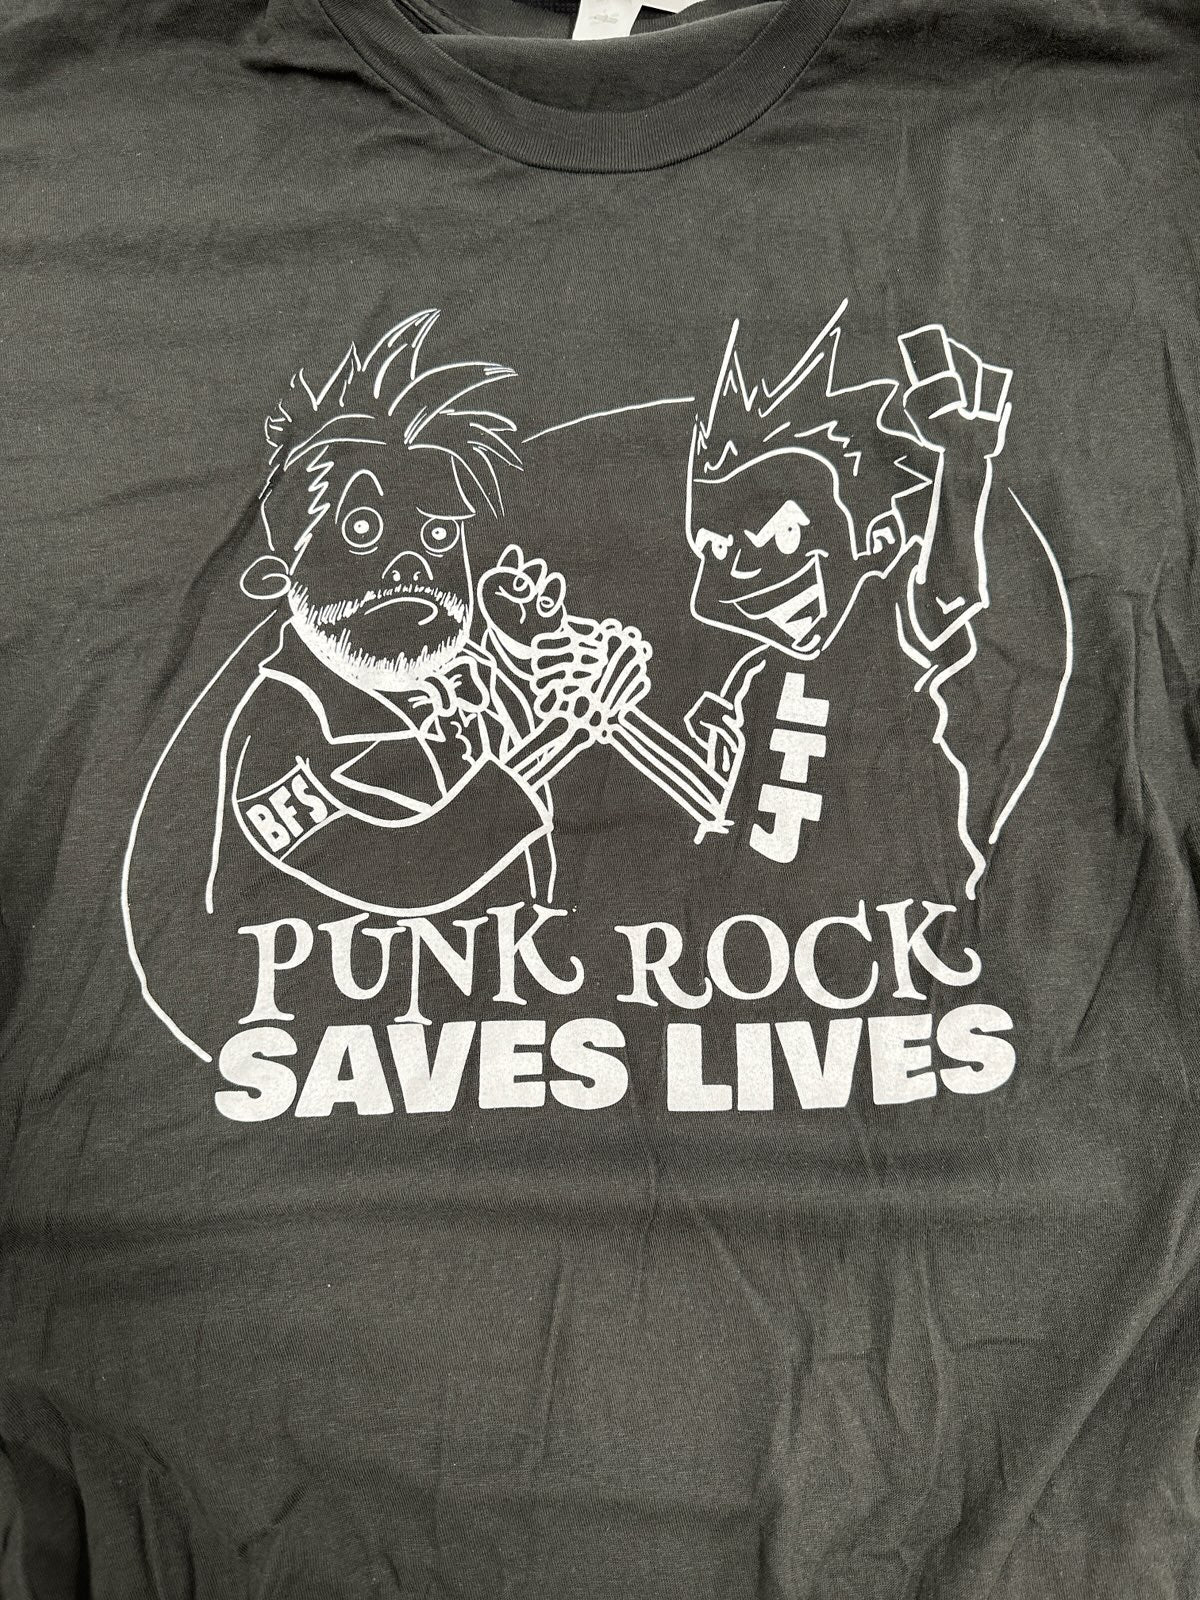 Bowling For Soup/Less Than Jake Punk Rock Saves Lives T-Shirt, Grey, L